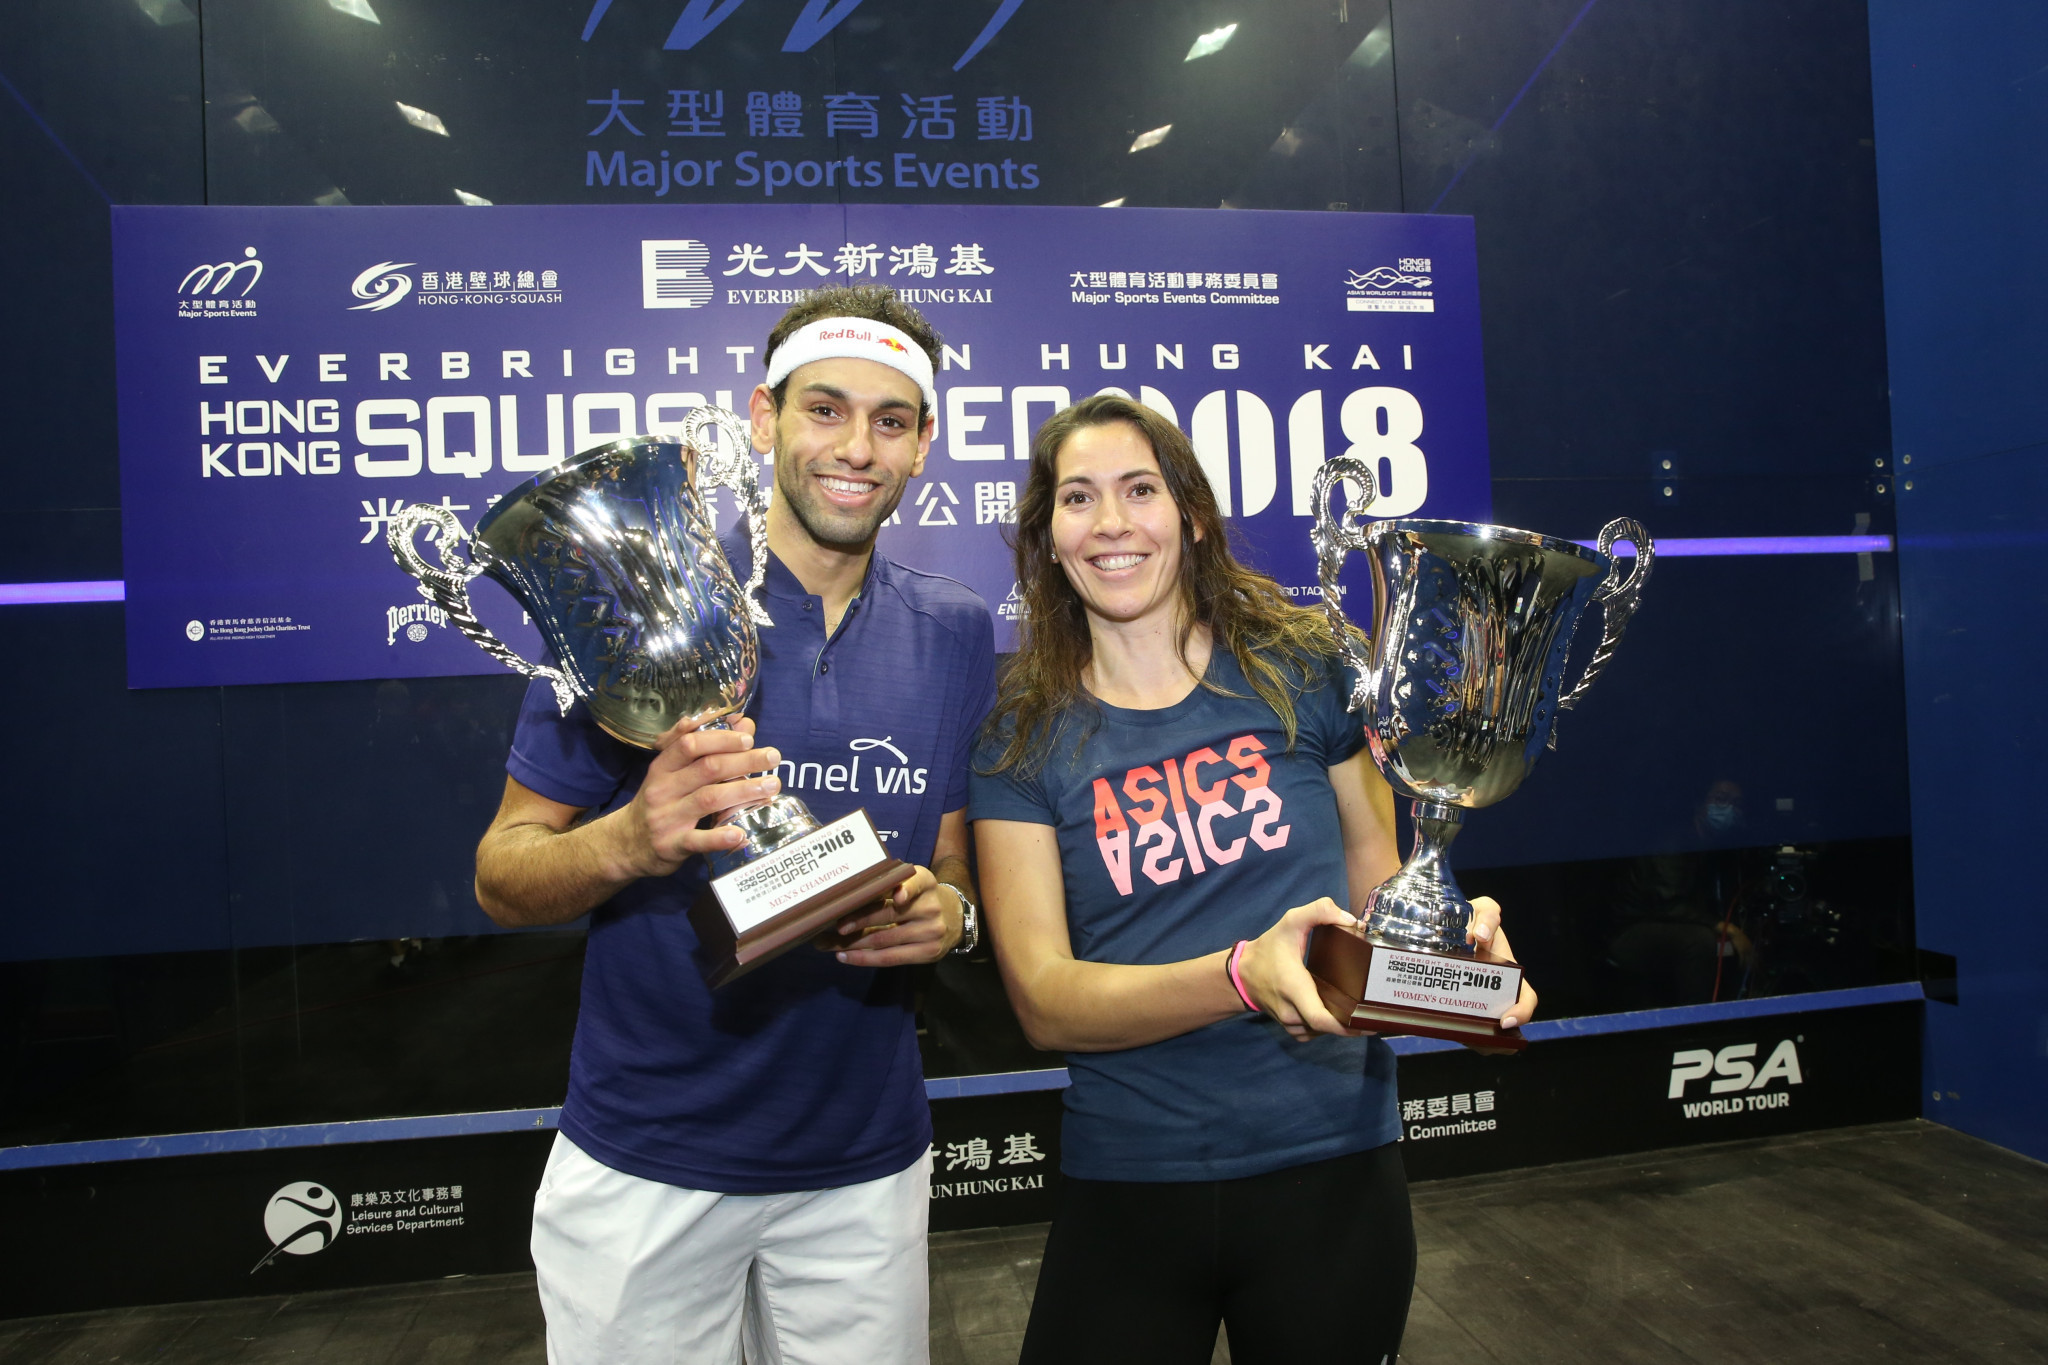 Egypt's Mohamed ElShorbagy and New Zealand's Joelle King won at last year's event ©PSA